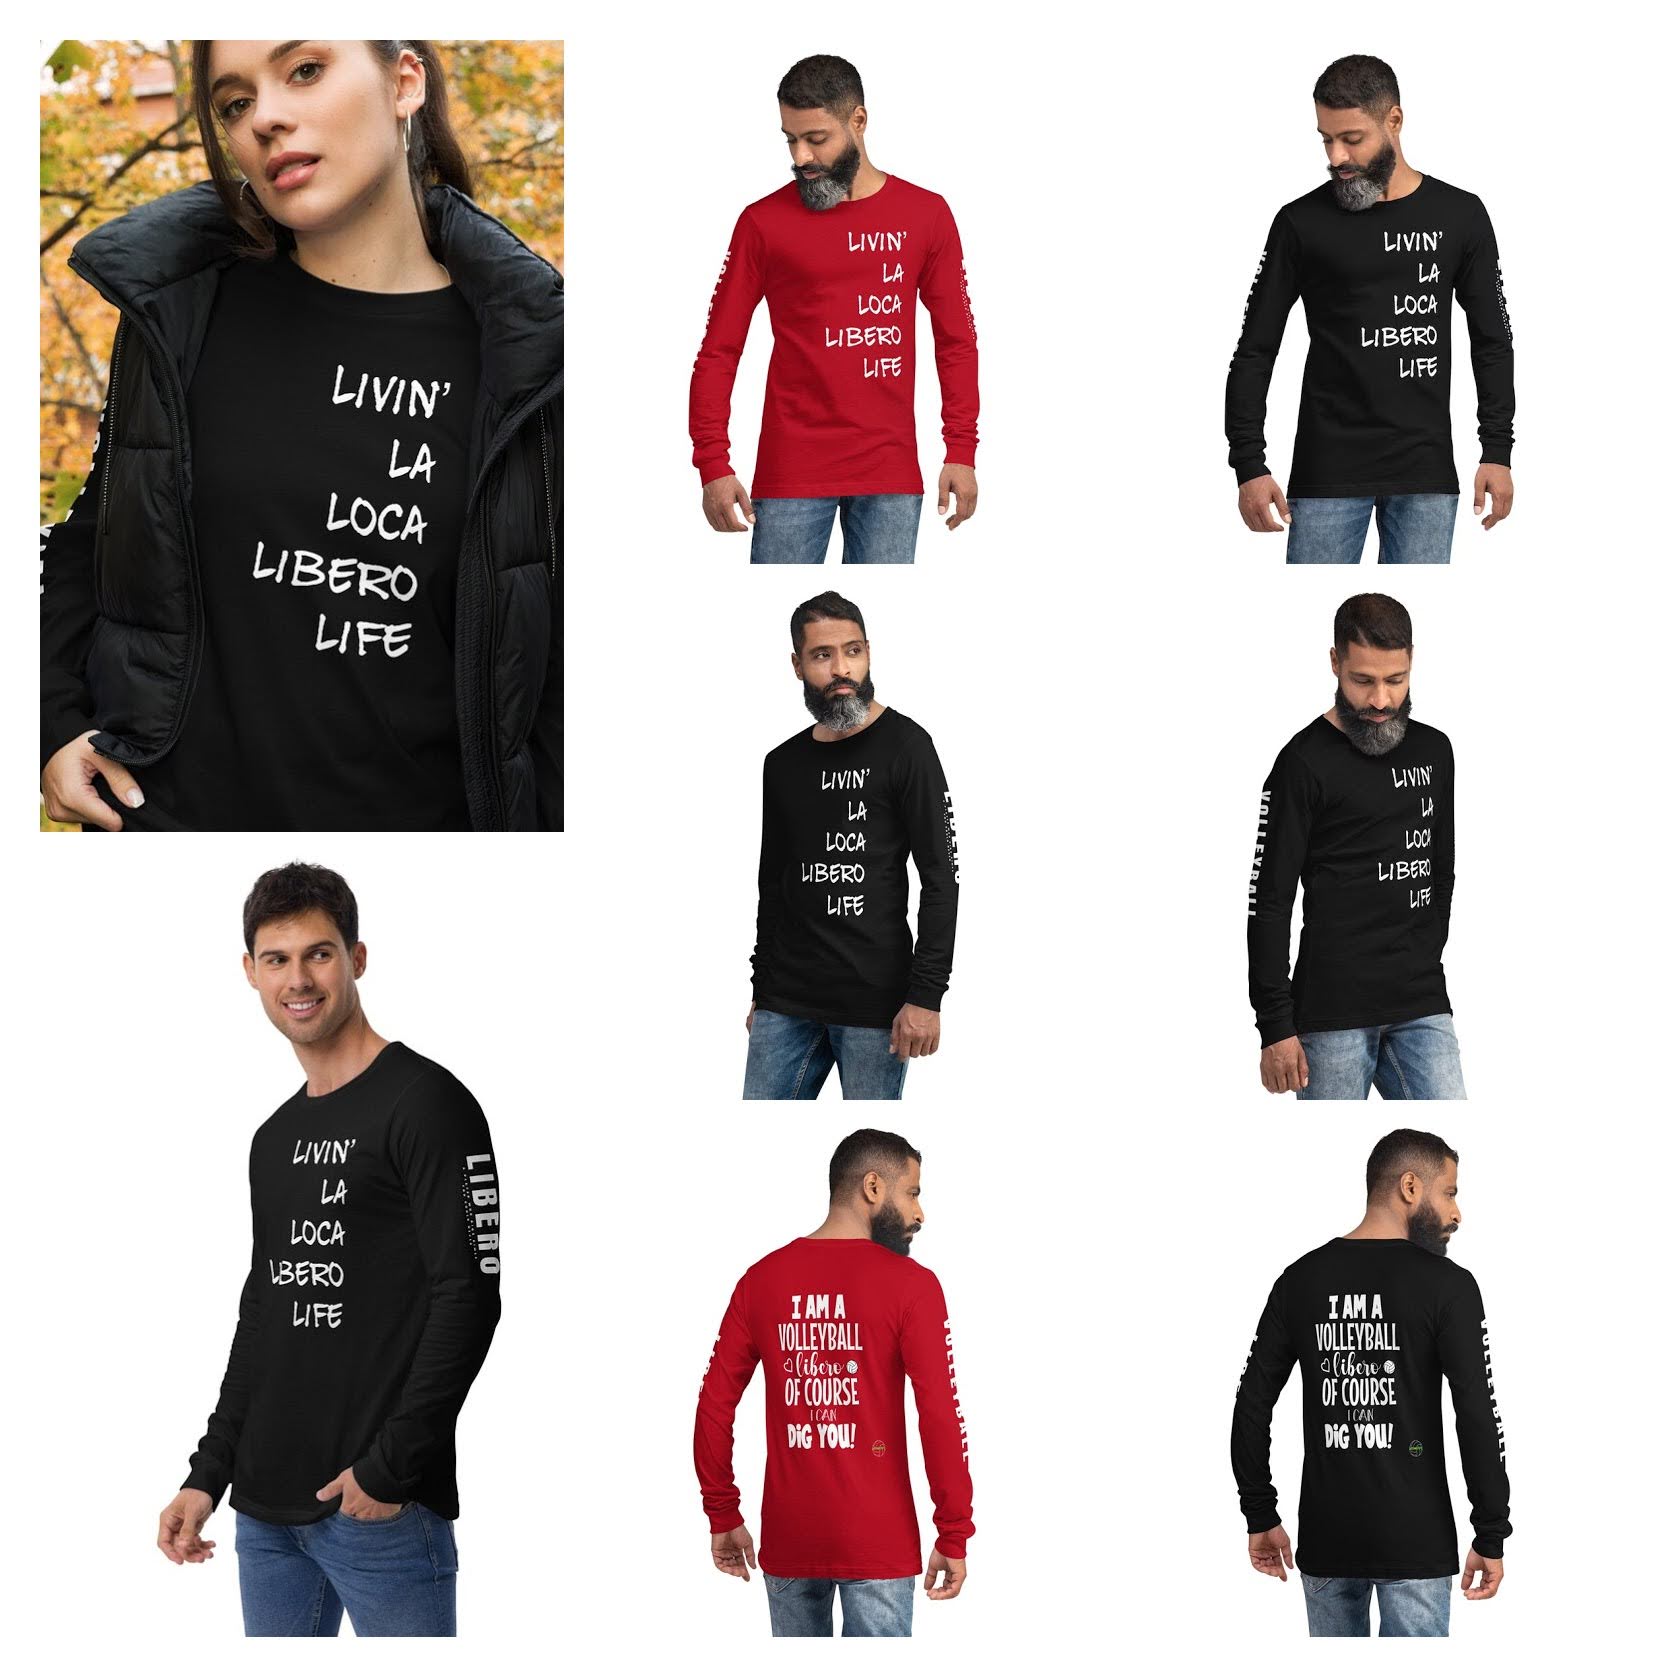 Livin La Loca Libero Life Volleyball Shirt, Long Sleeve Volleyball Shirts, Gifts For Volleyball Players